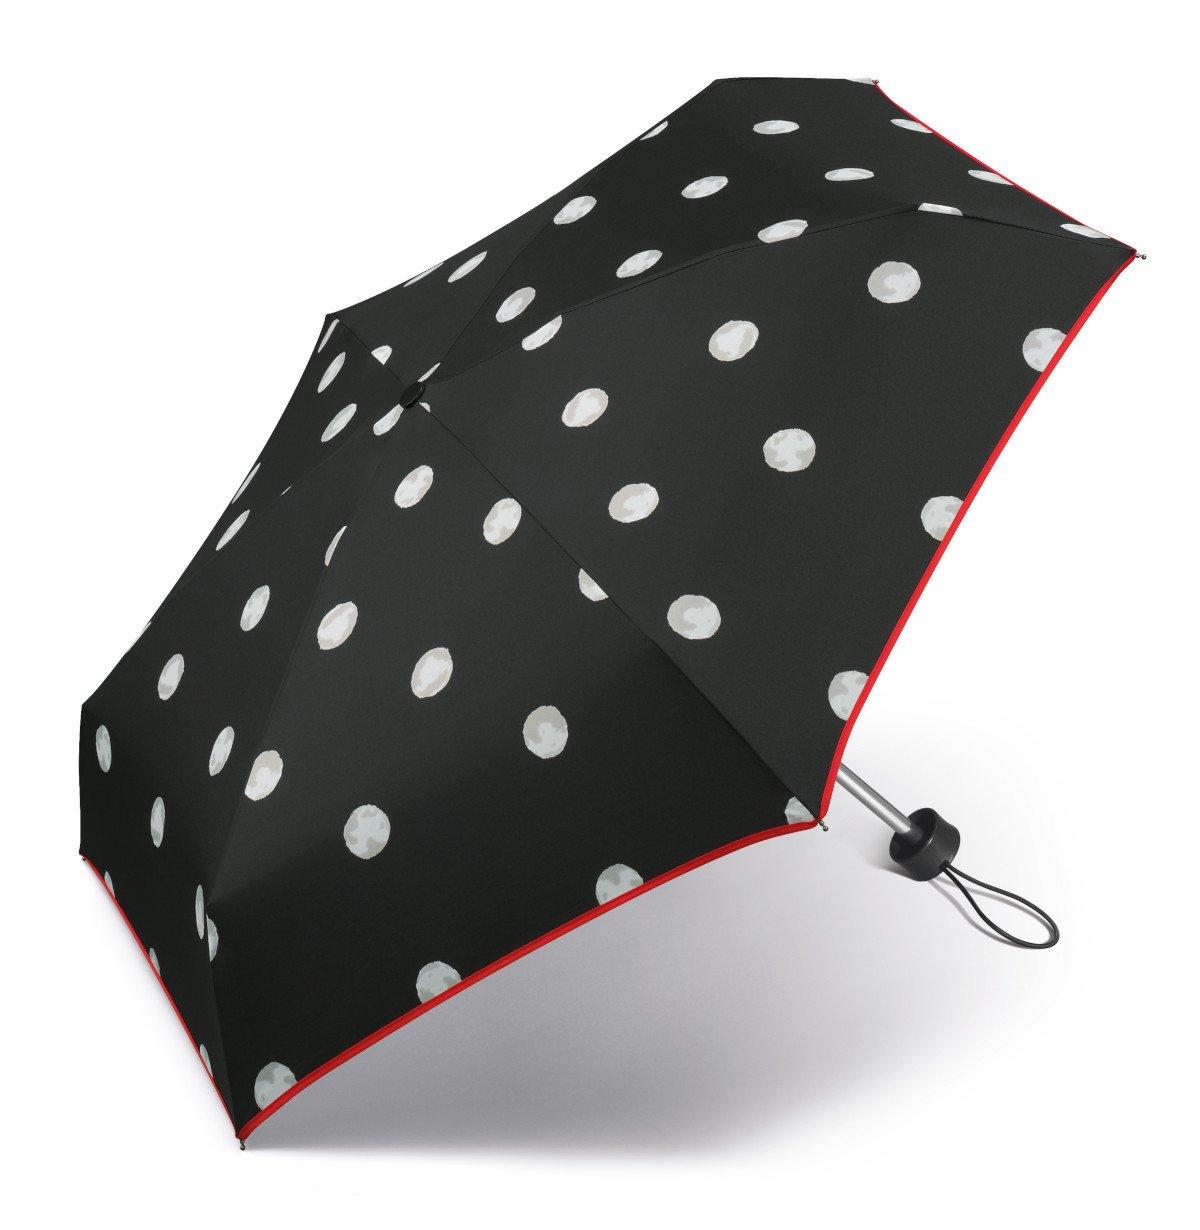 Paraguas Plegable Mini Topos Blanco y Negro - Paraguas Originales, Paraguas plegable Mujer, Paraguas plegables originales - Que puedo